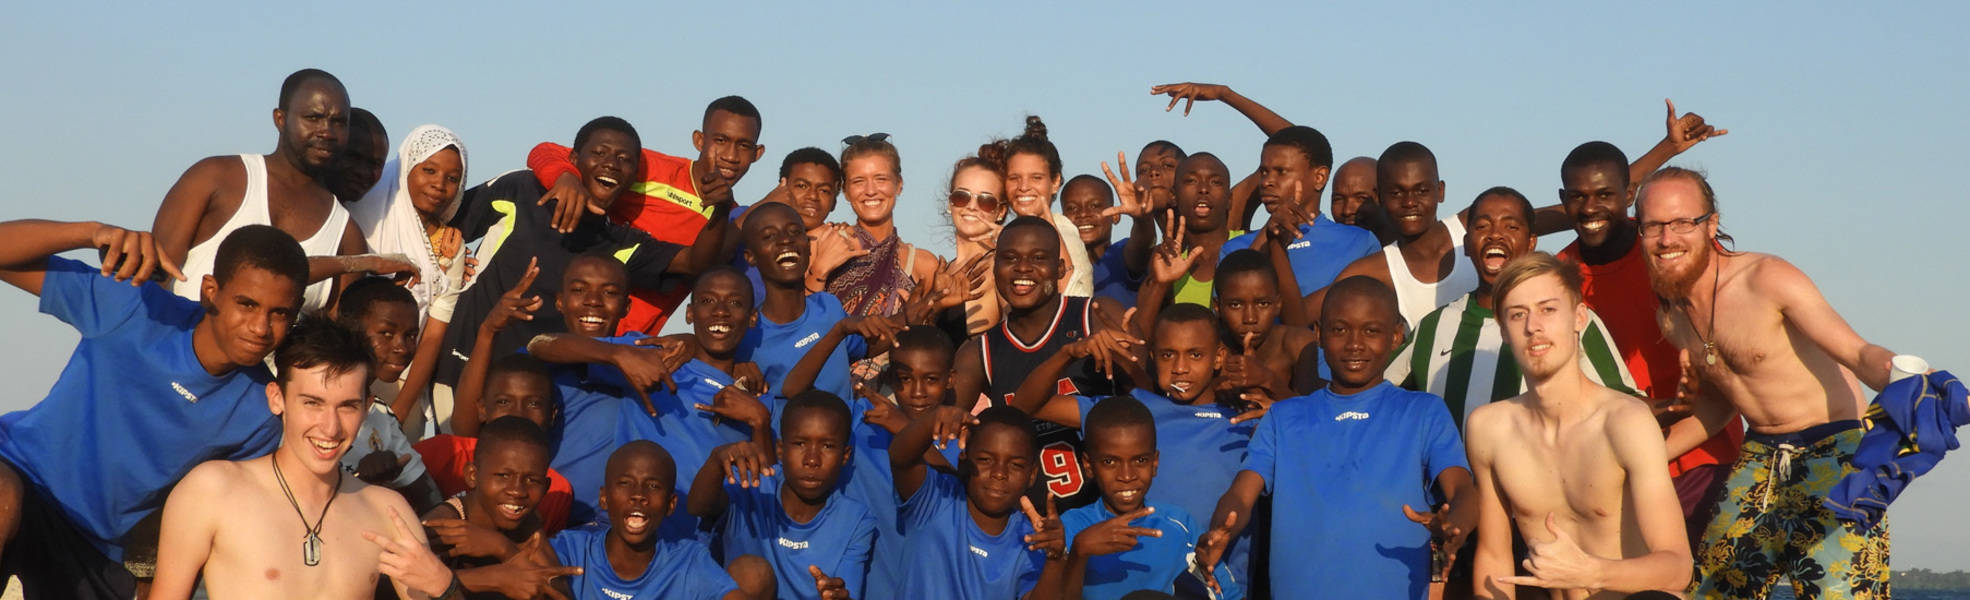 Volunteering as football coach on Zanzibar